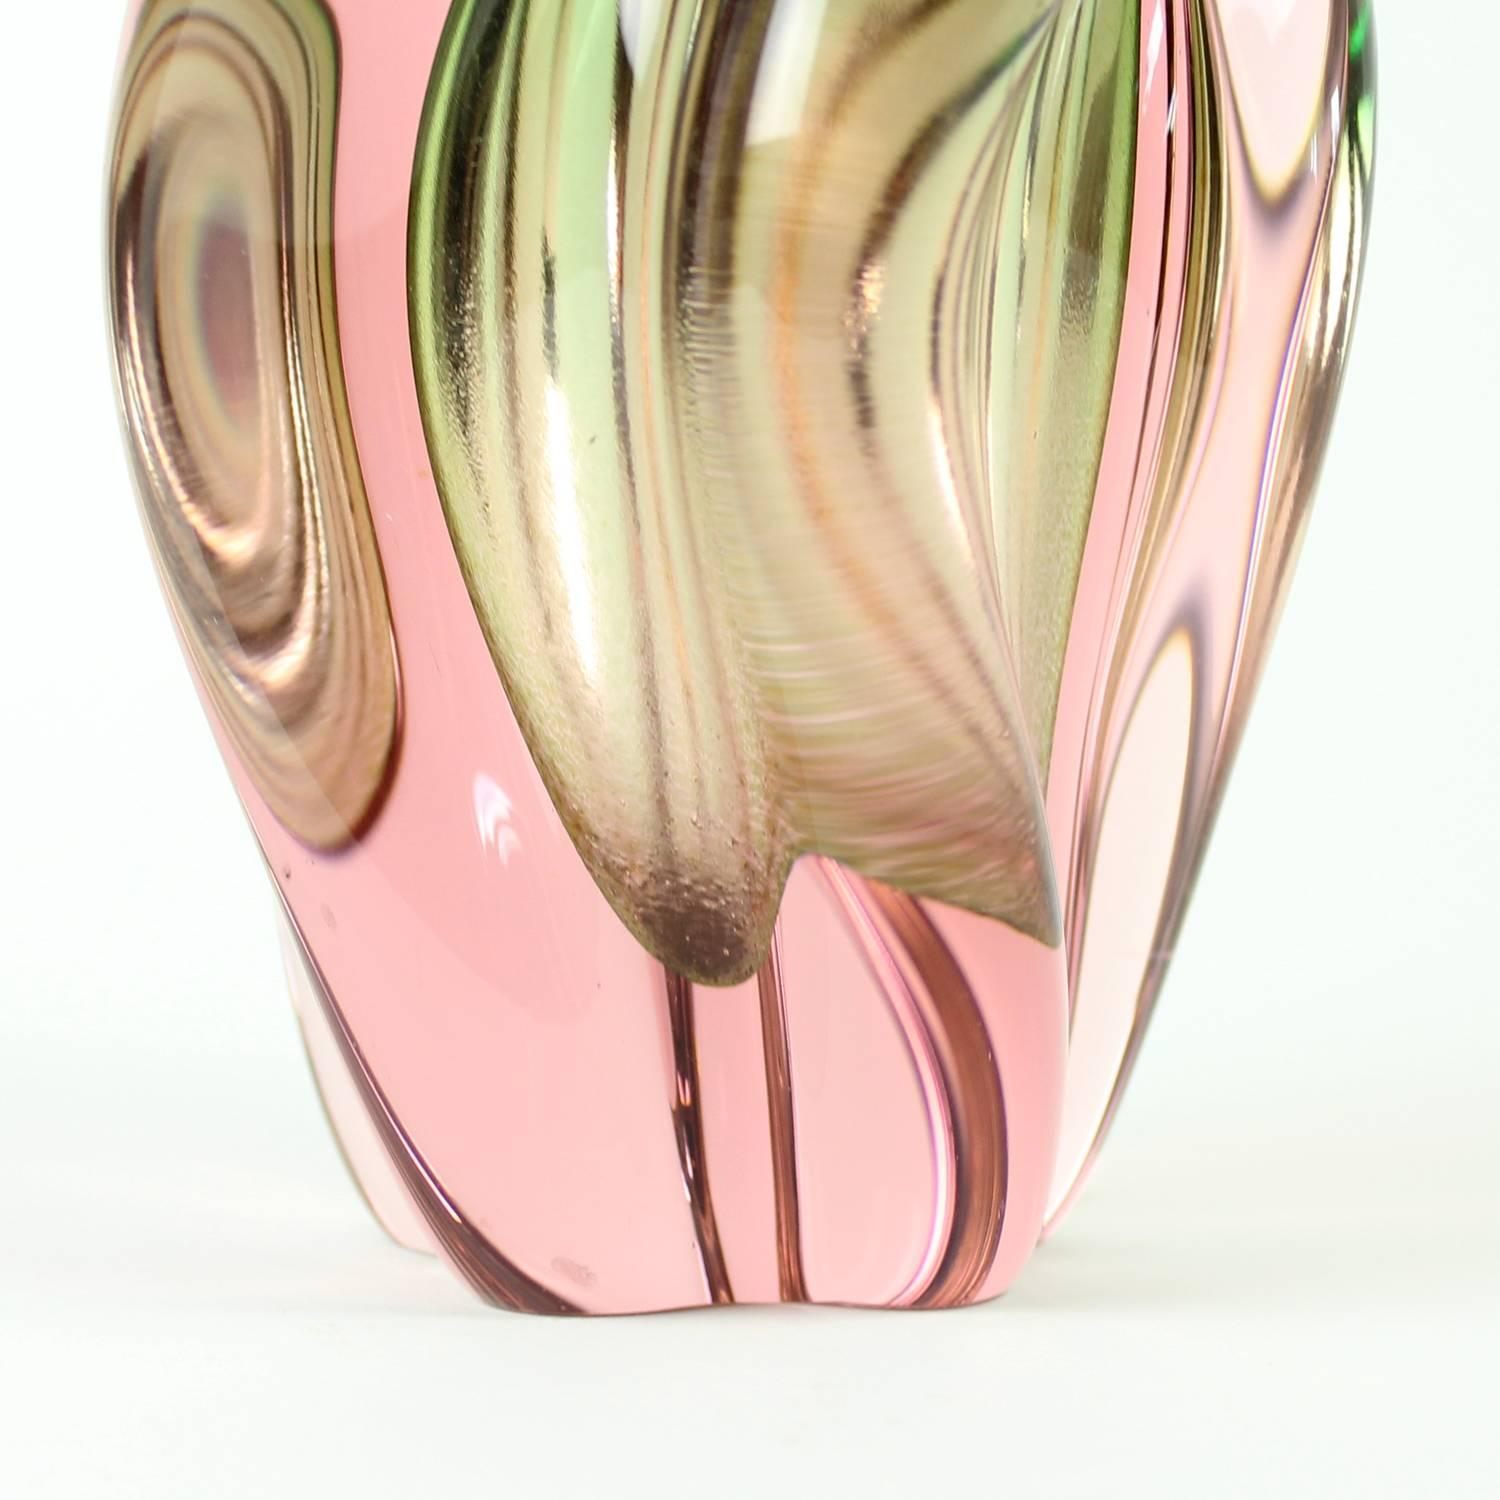 josef hospodka glass vase